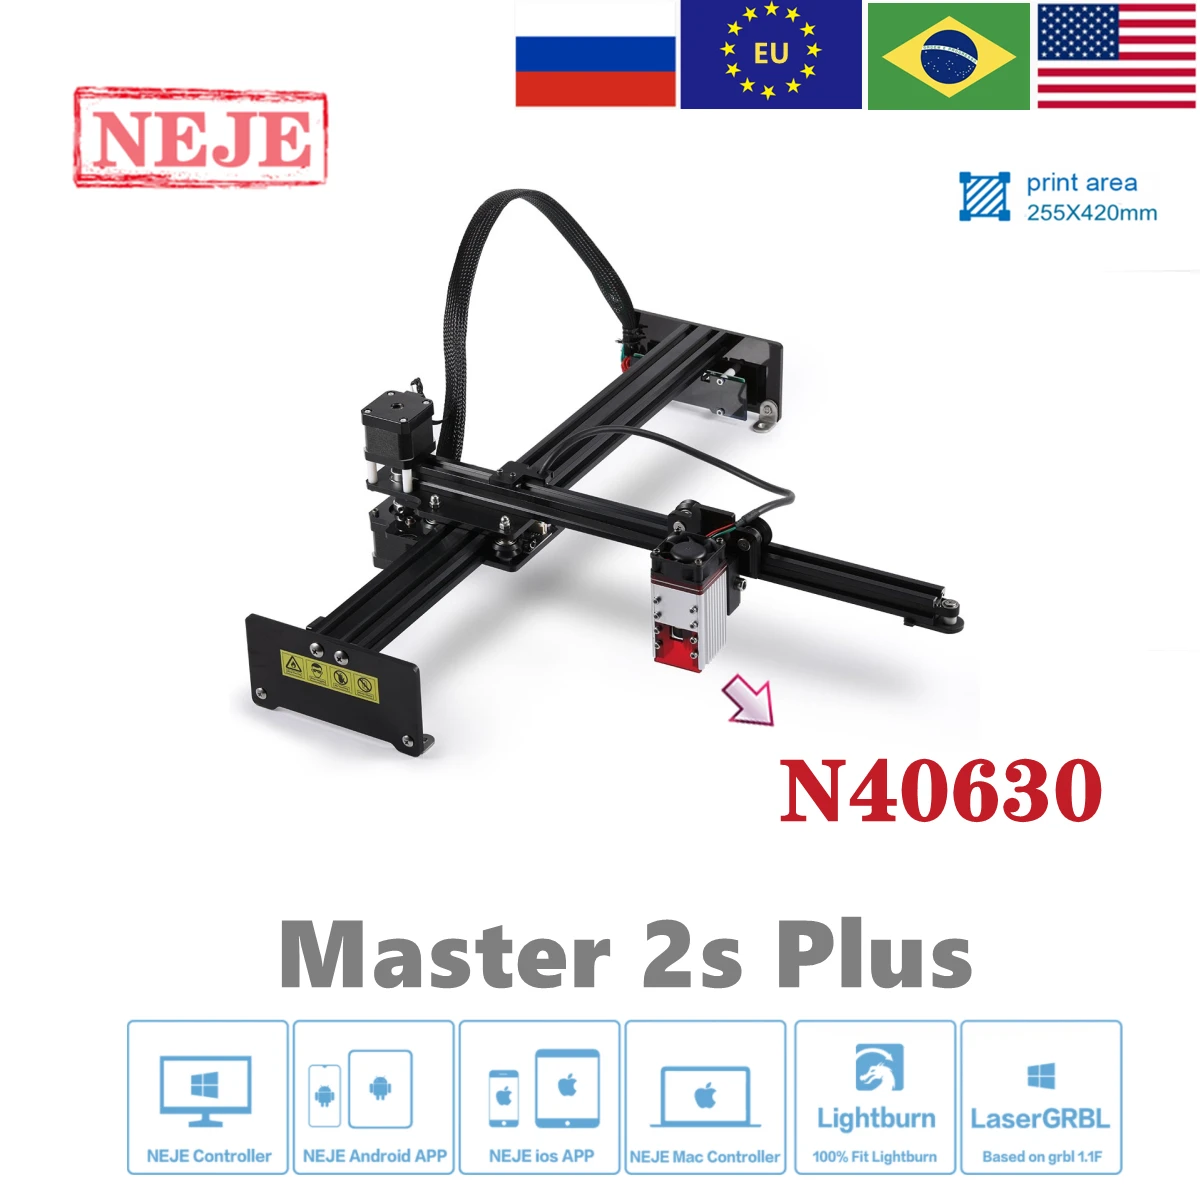 NEJE Master 2s Plus A40640/N40630 CNC Laser Engraving Machine Cutting Wood Cutter Printer APP Wireles Bluetooth Benbox Lightburn wood pellet machine Woodworking Machinery